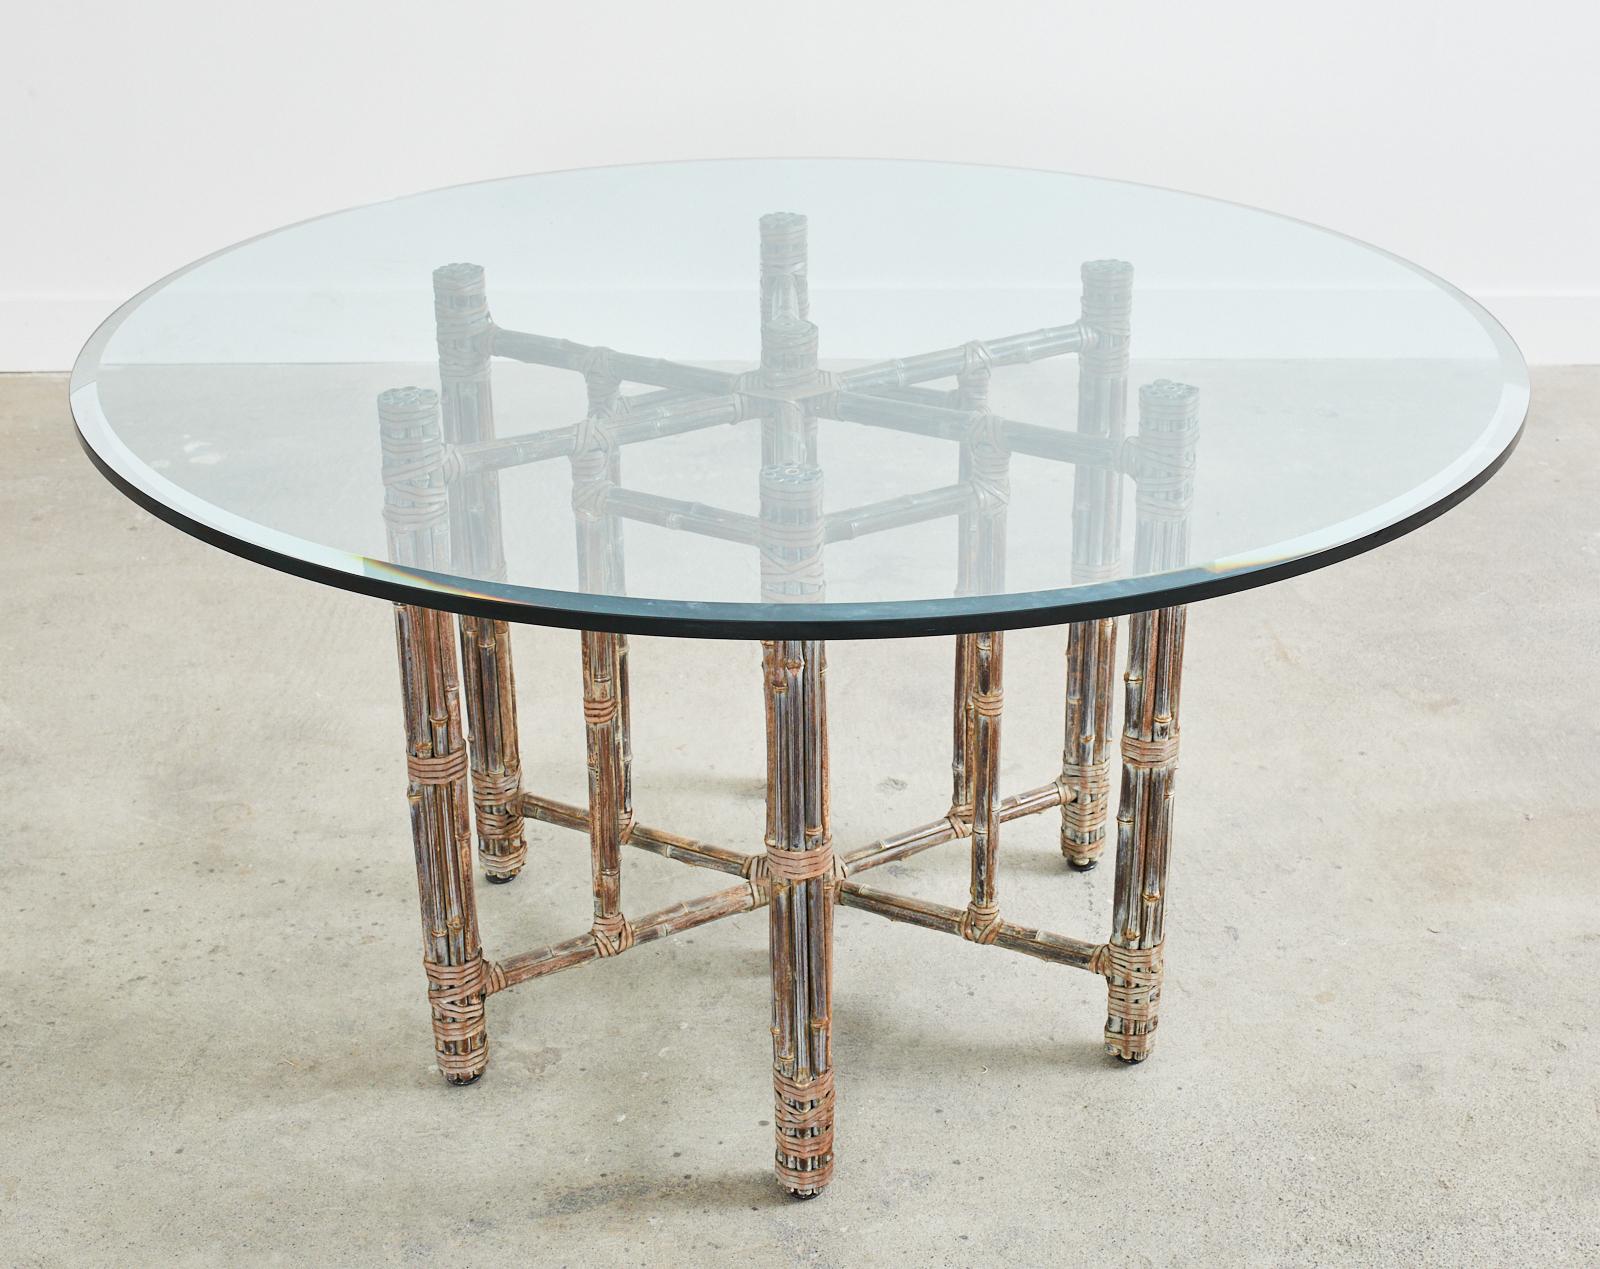 McGuire Organic Modern Bamboo Rattan Hexagonal Dining Table For Sale 12